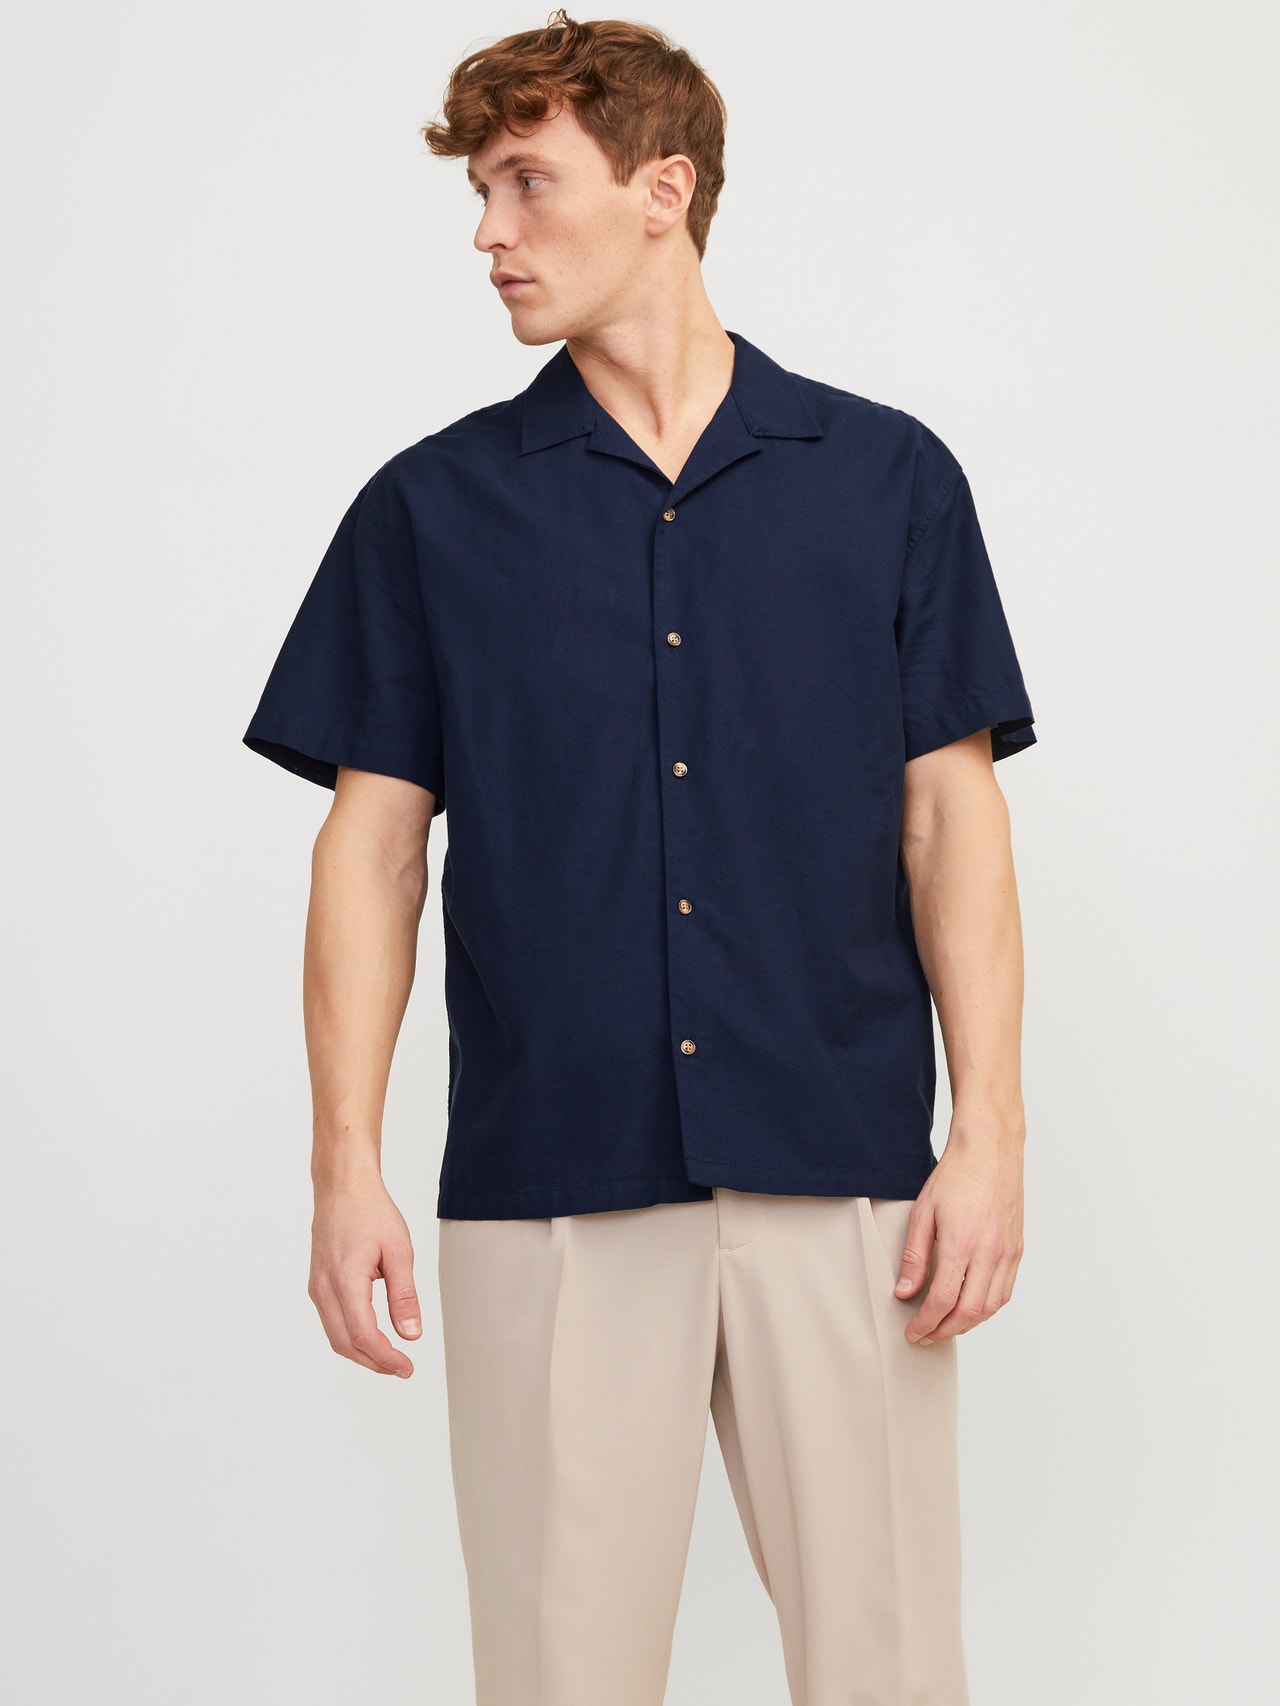 Jack & Jones Relaxed Fit Shirt -Navy Blazer - 12248382